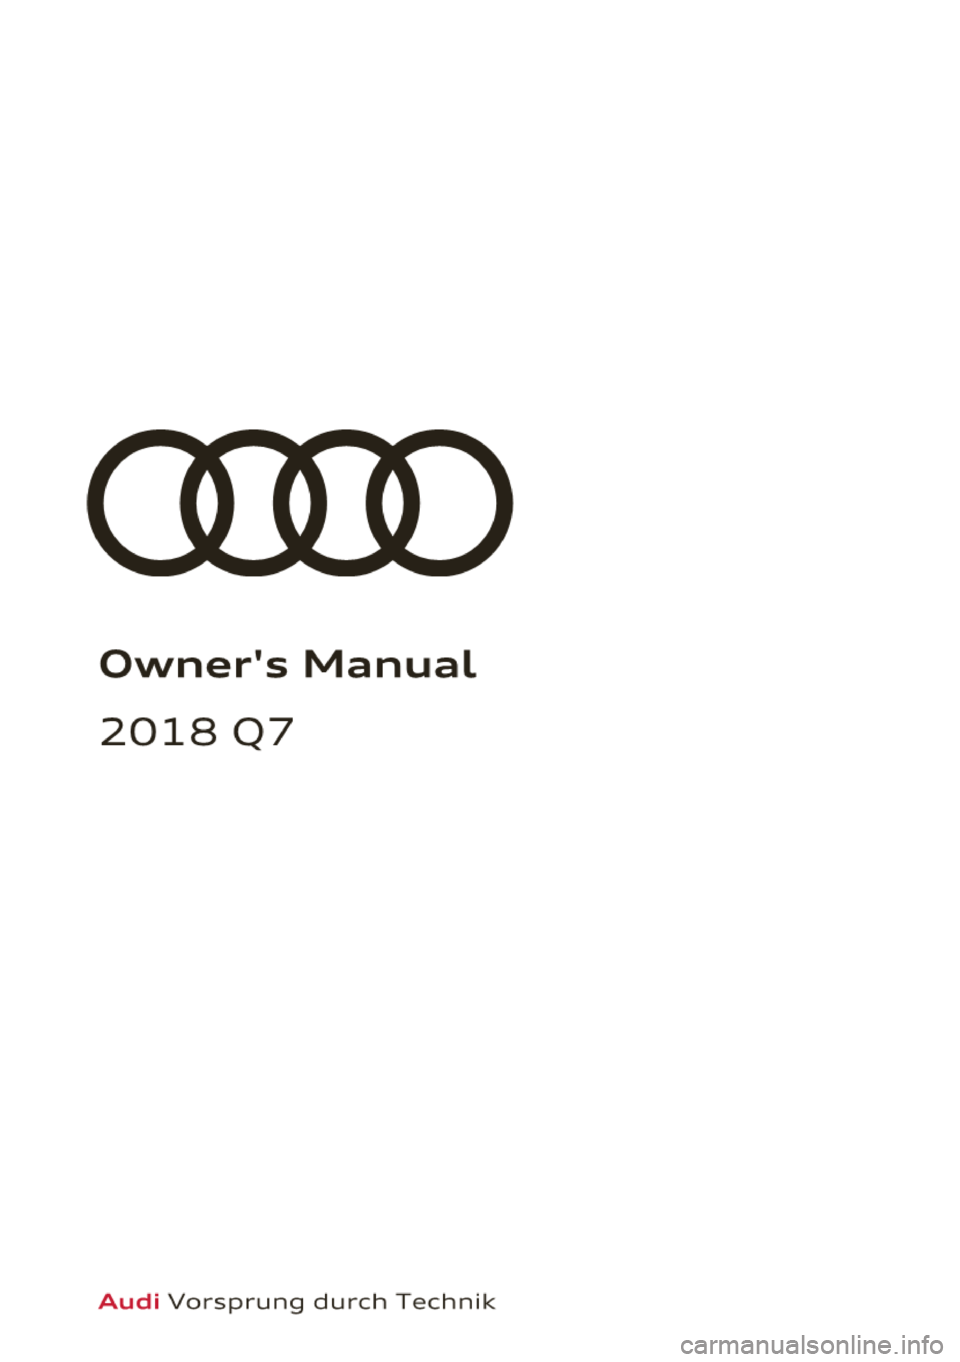 AUDI Q7 2018  Owner´s Manual Owners  Manual 
2018 07 
Audi Vorsprung  durch  Technik  